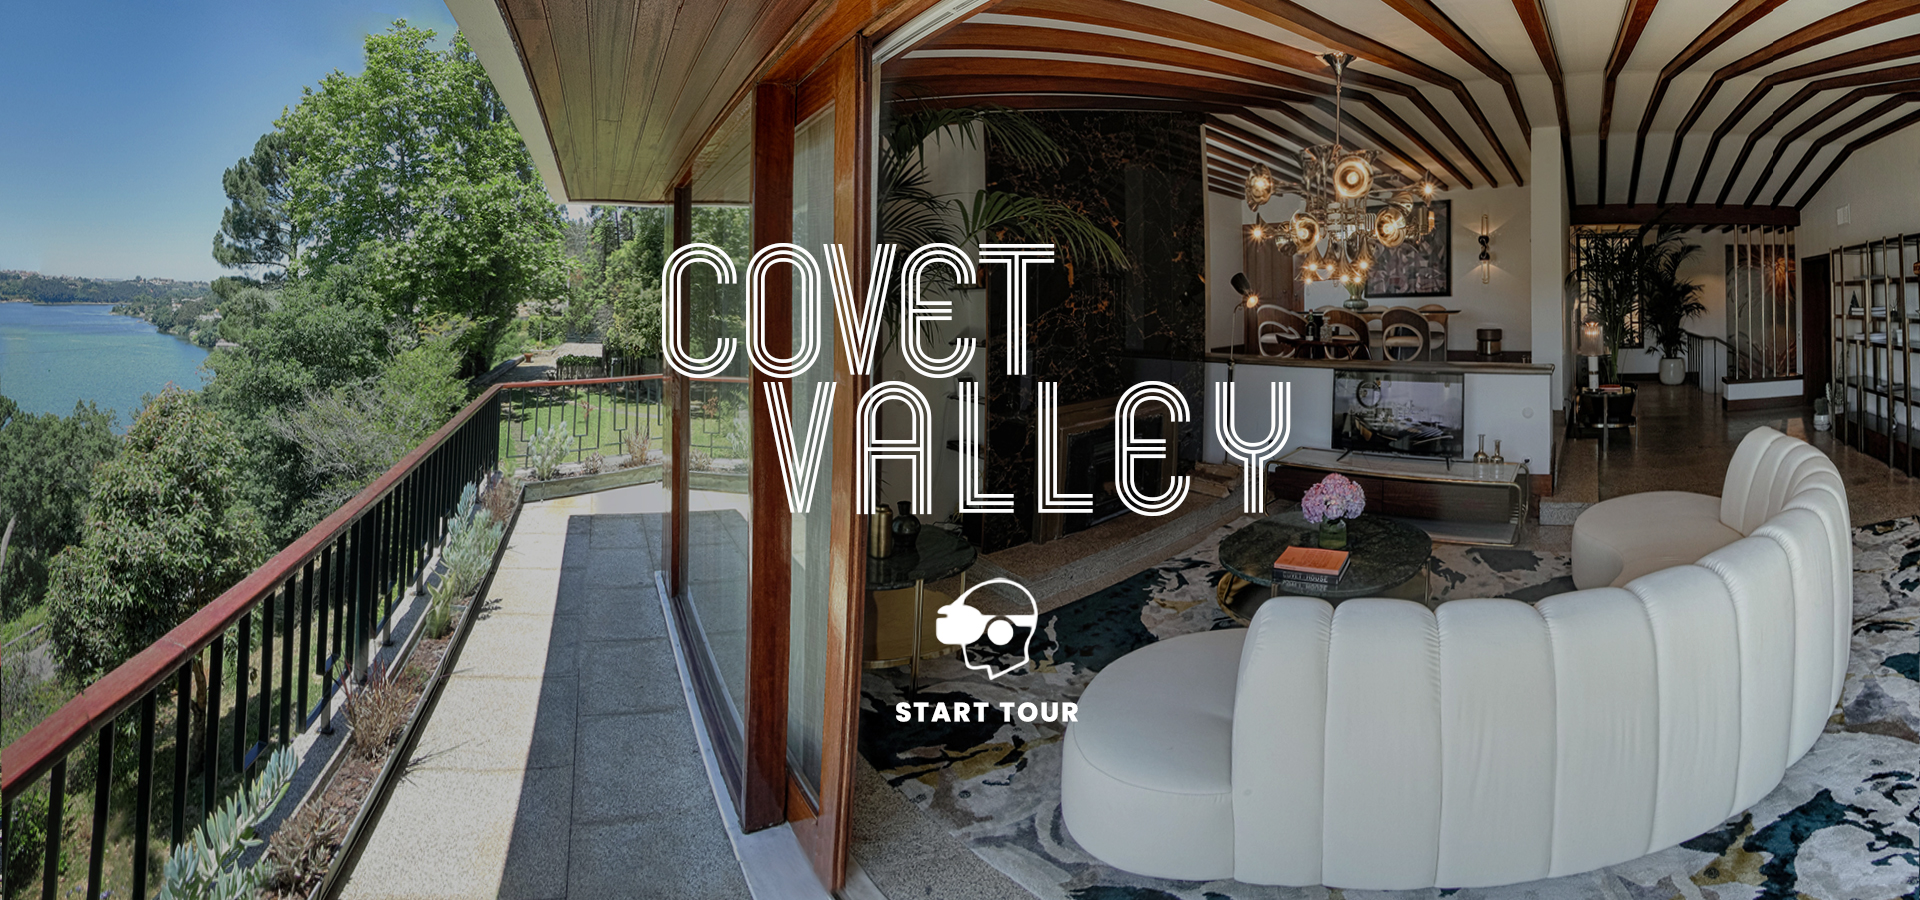 Covet Valley